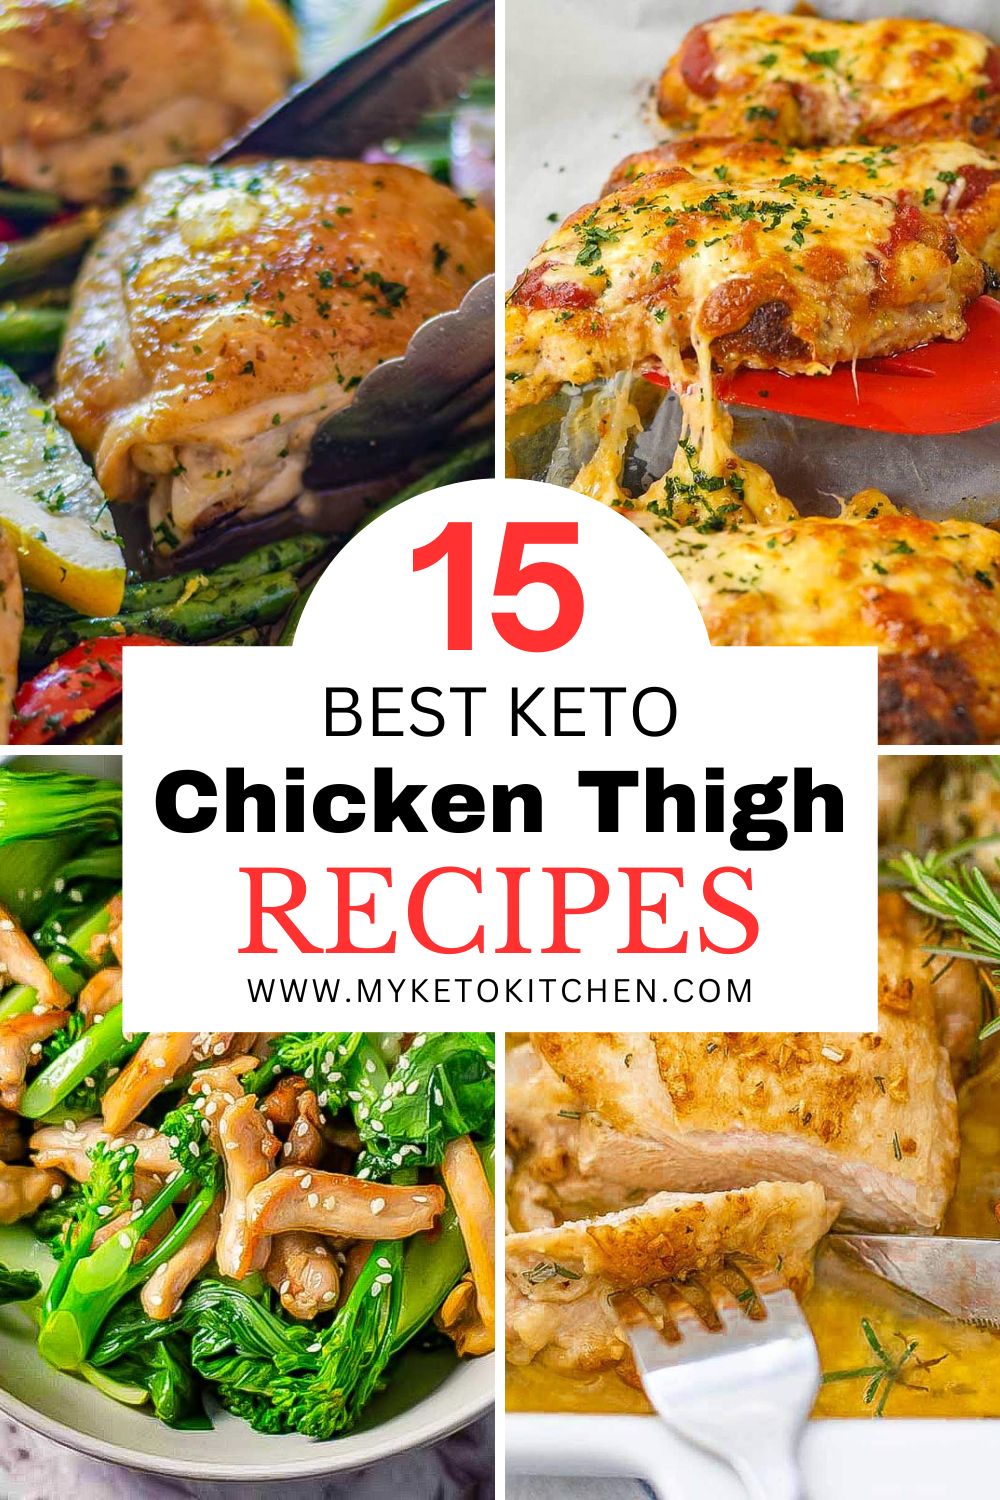 15 Best Keto Chicken Thigh Recipes by My Keto Kitchen